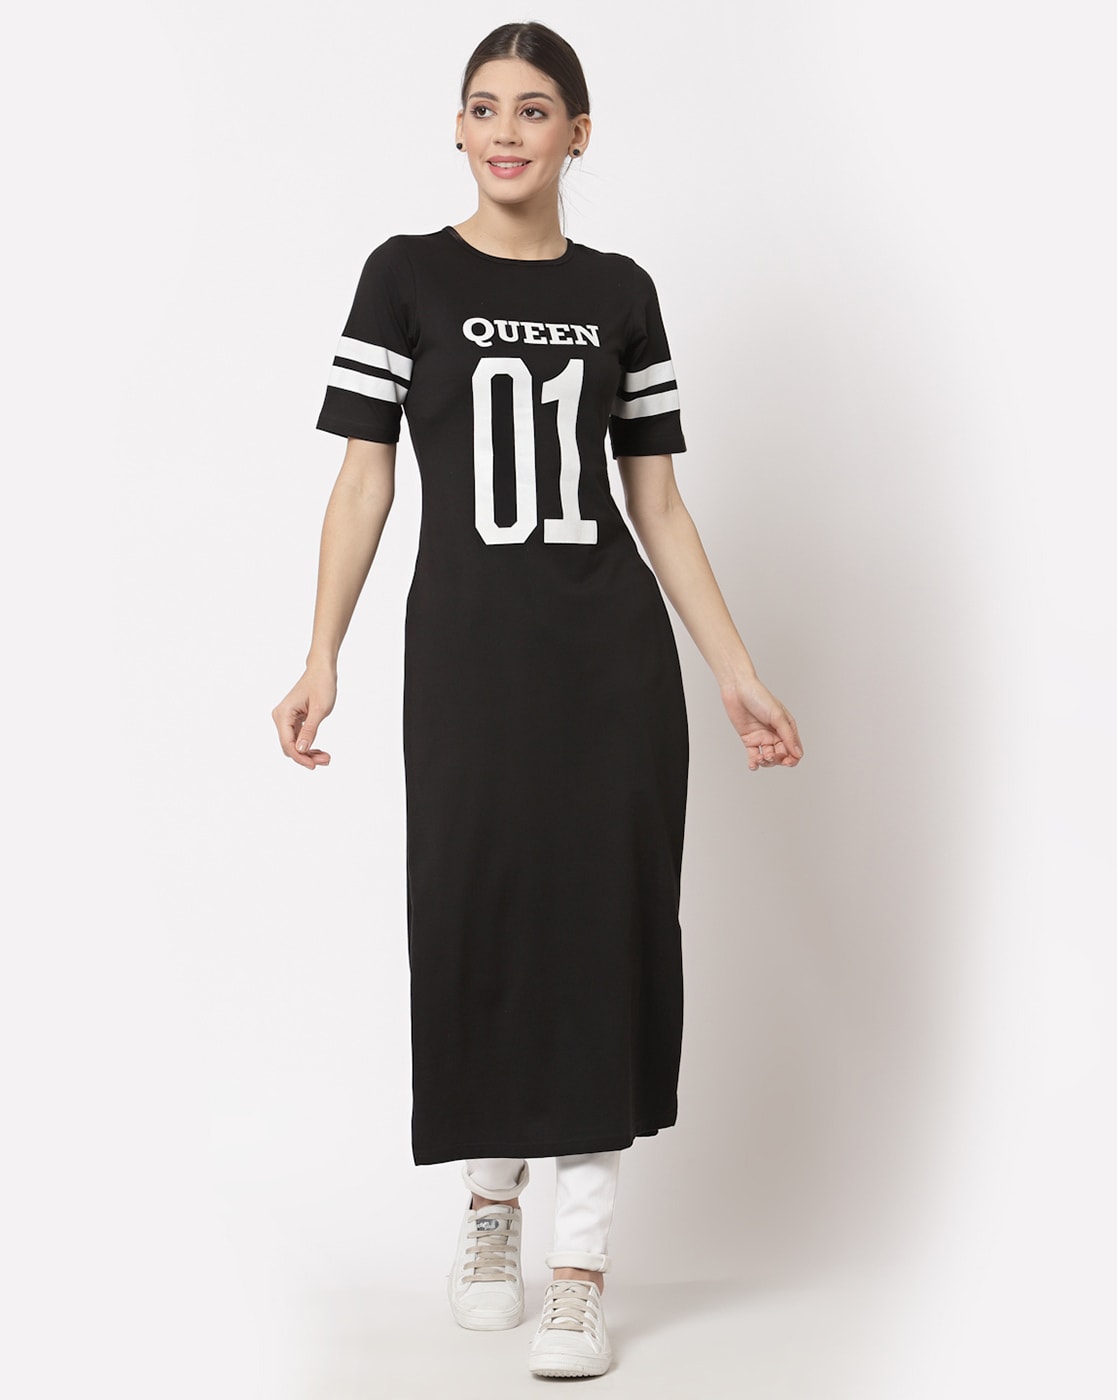 T-Shirts Dress: Explore Women Black Cotton T-Shirts Dress on Cliths.com